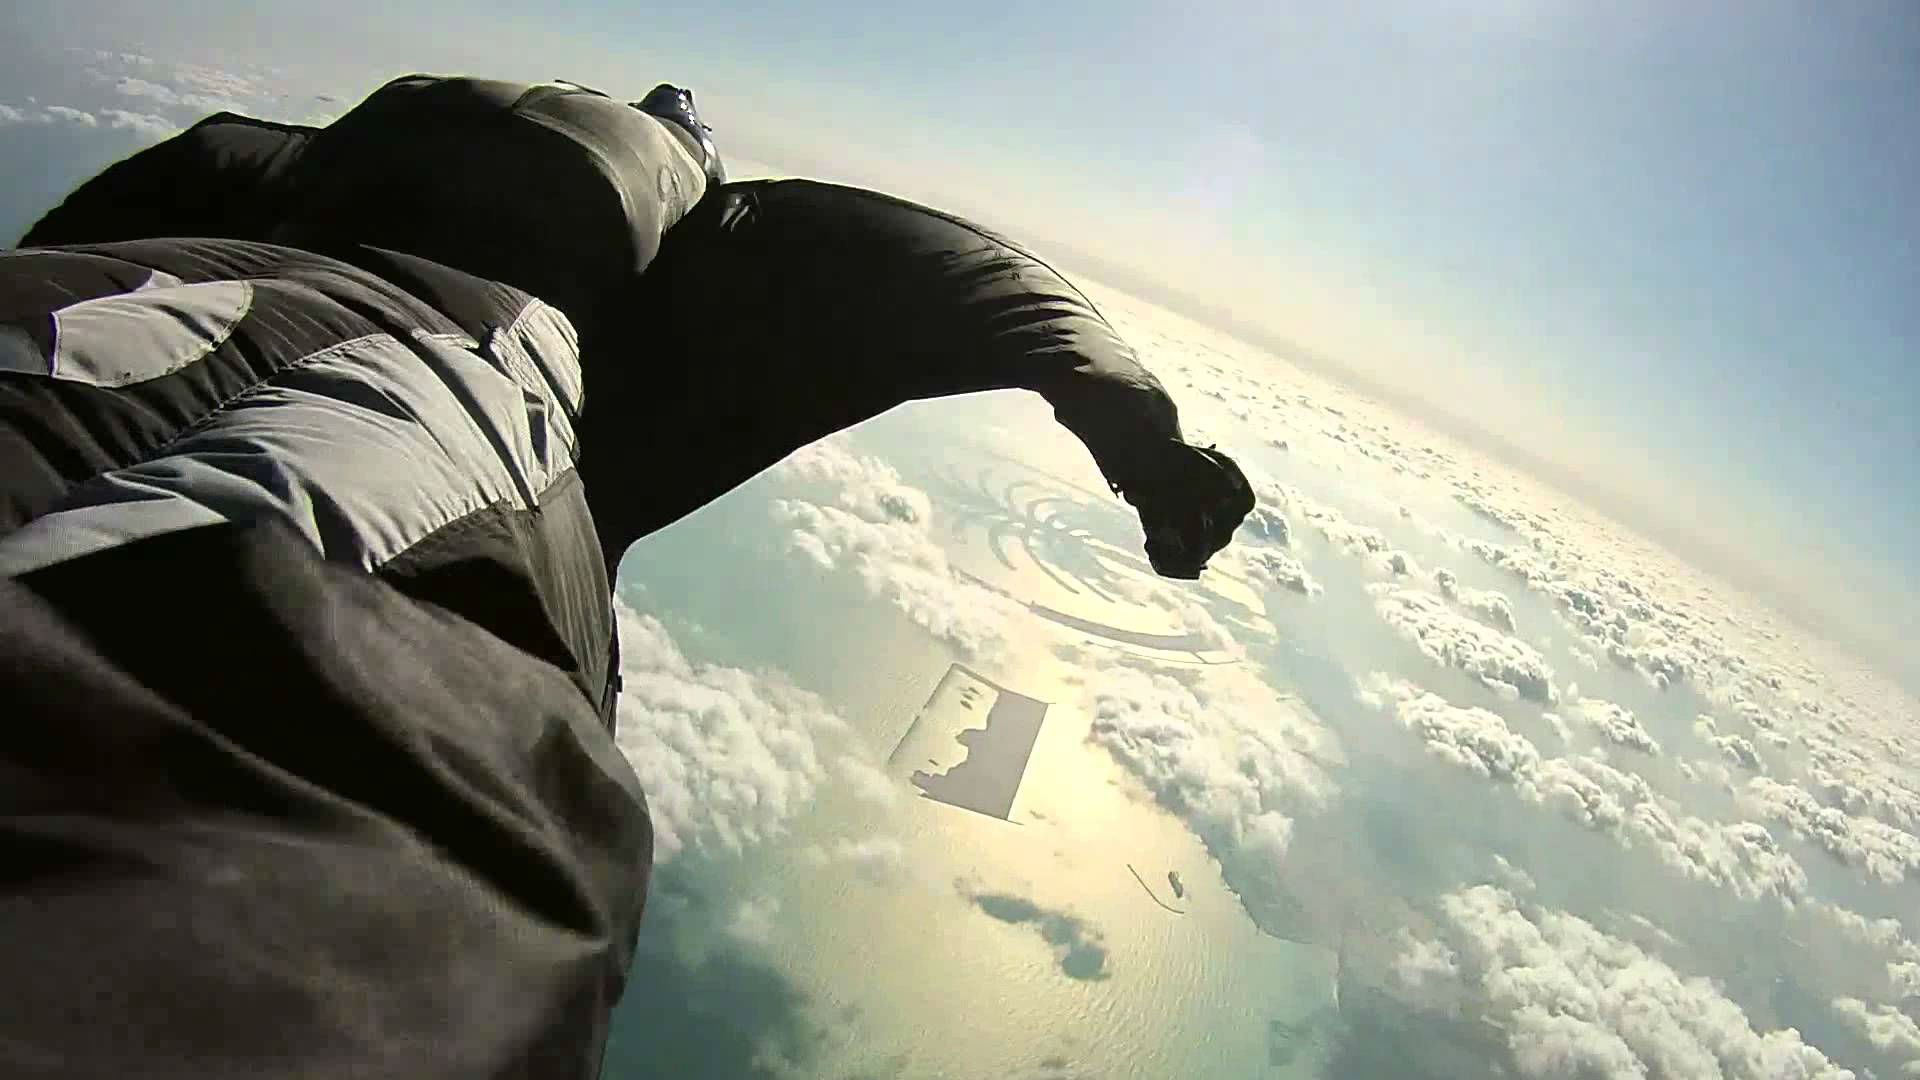 Skydive Hd Wallpaper 1080p - 1920x1080 Wallpaper 